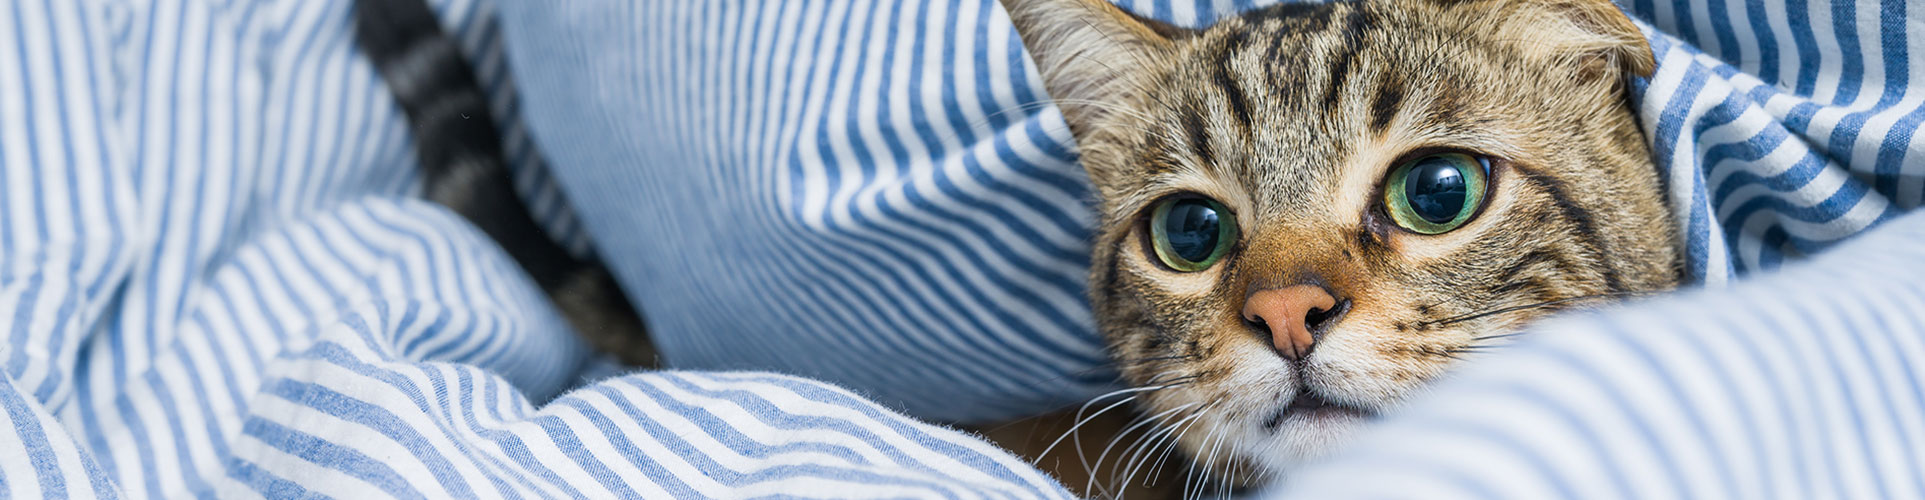 cat-hiding-in-pillows